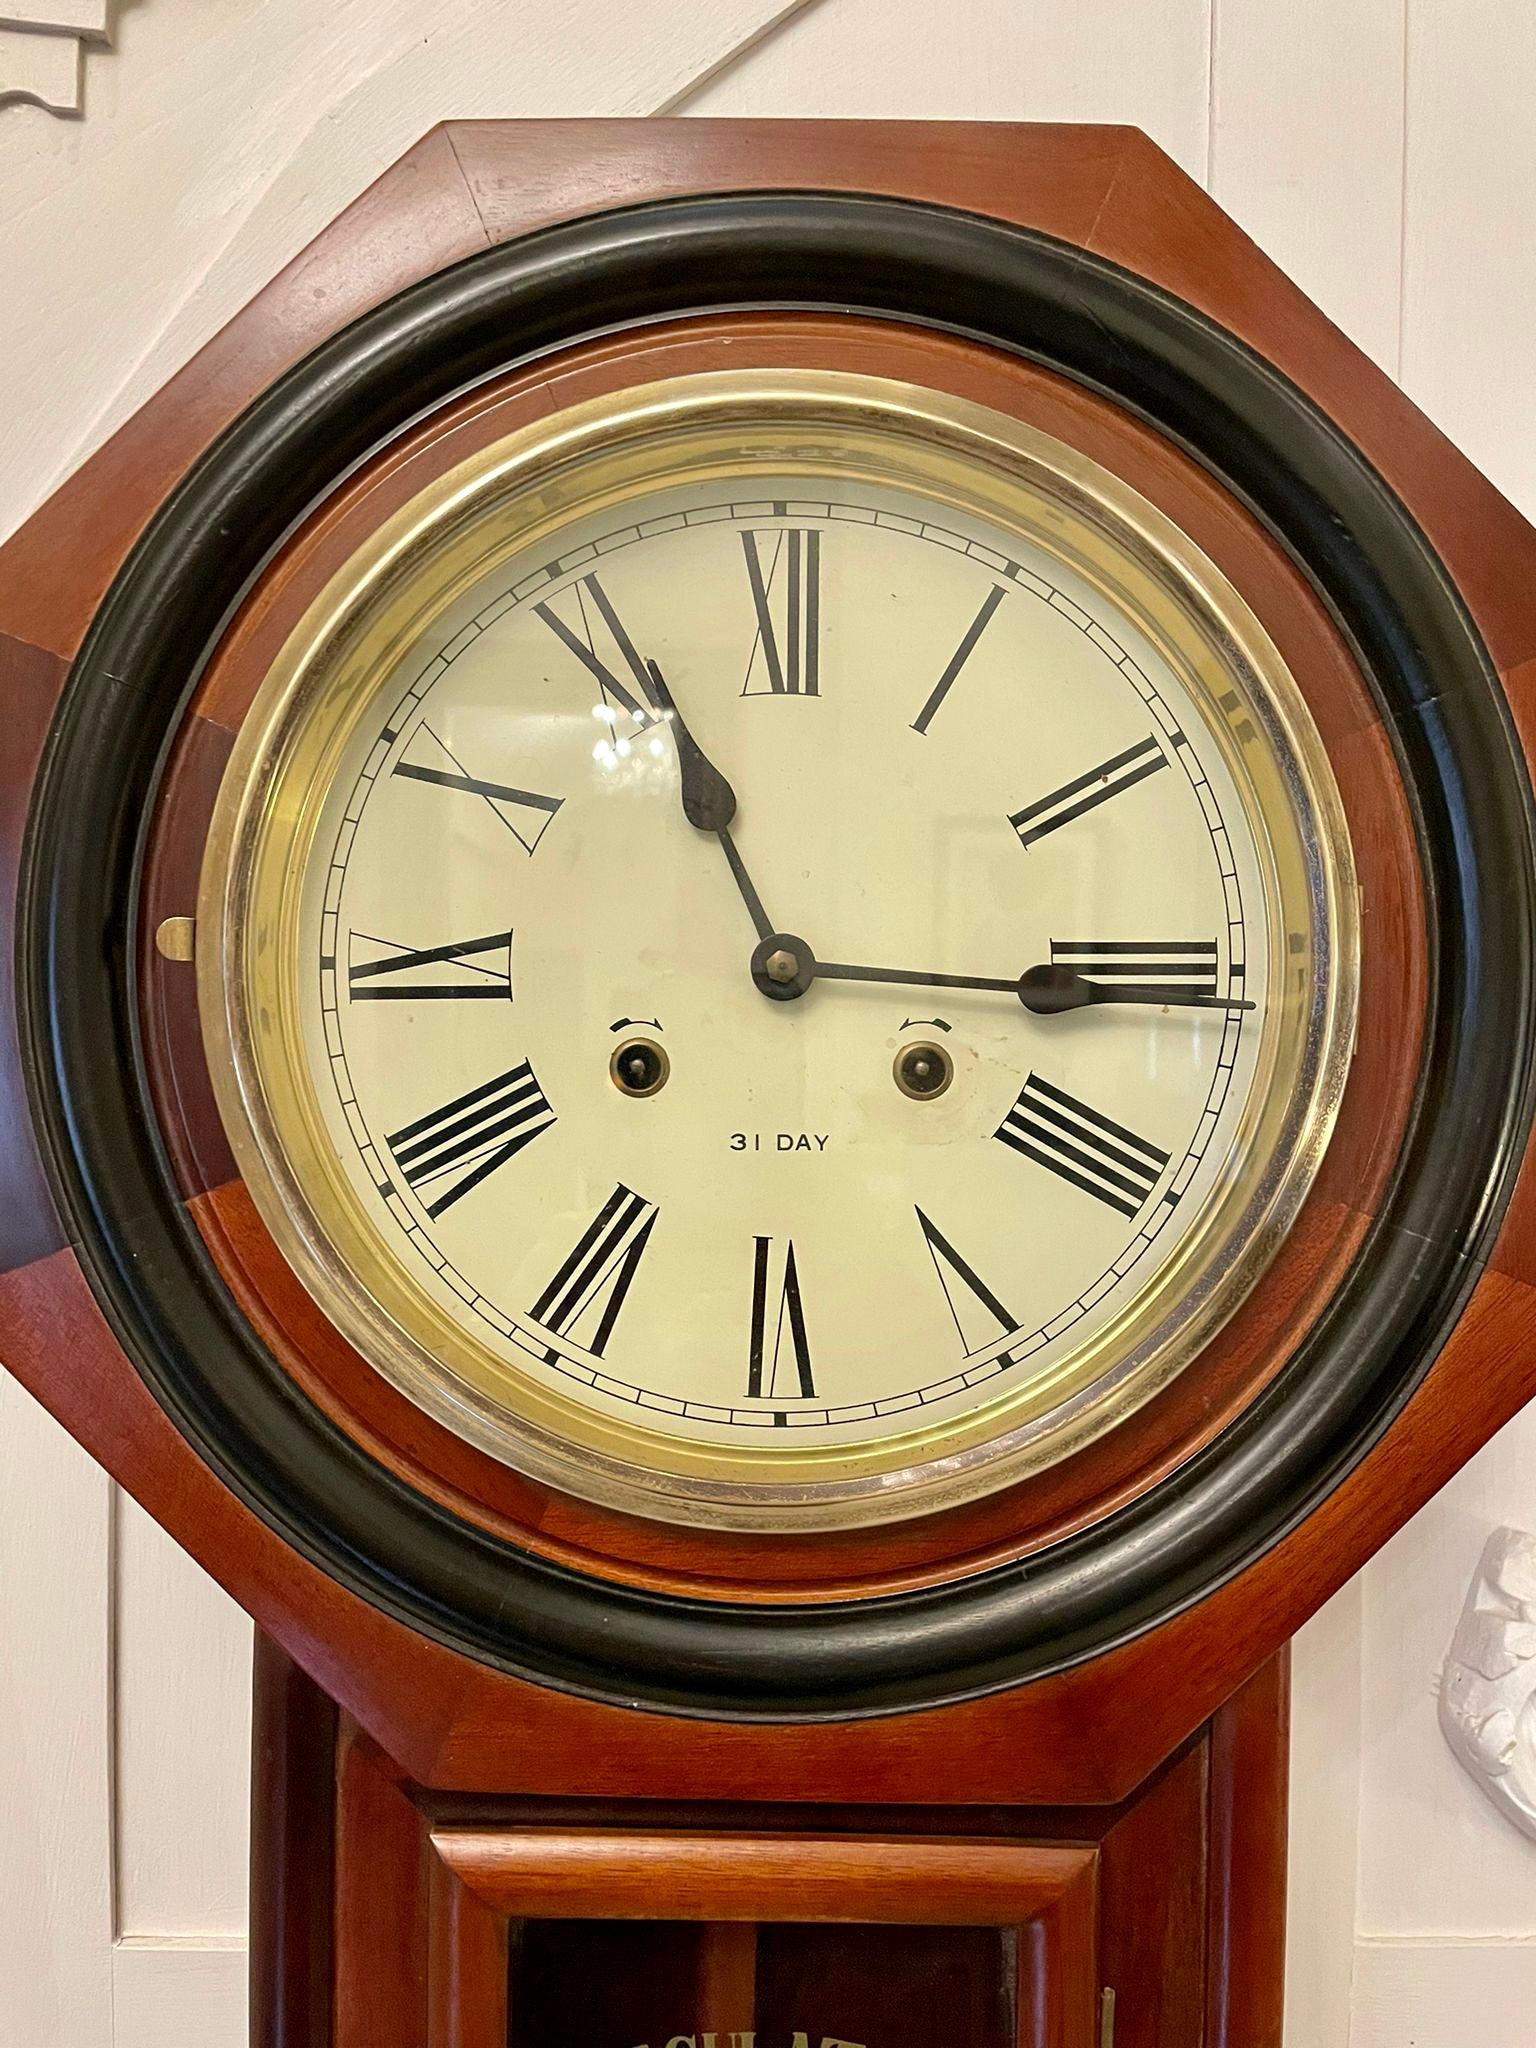 31 day regulator clock